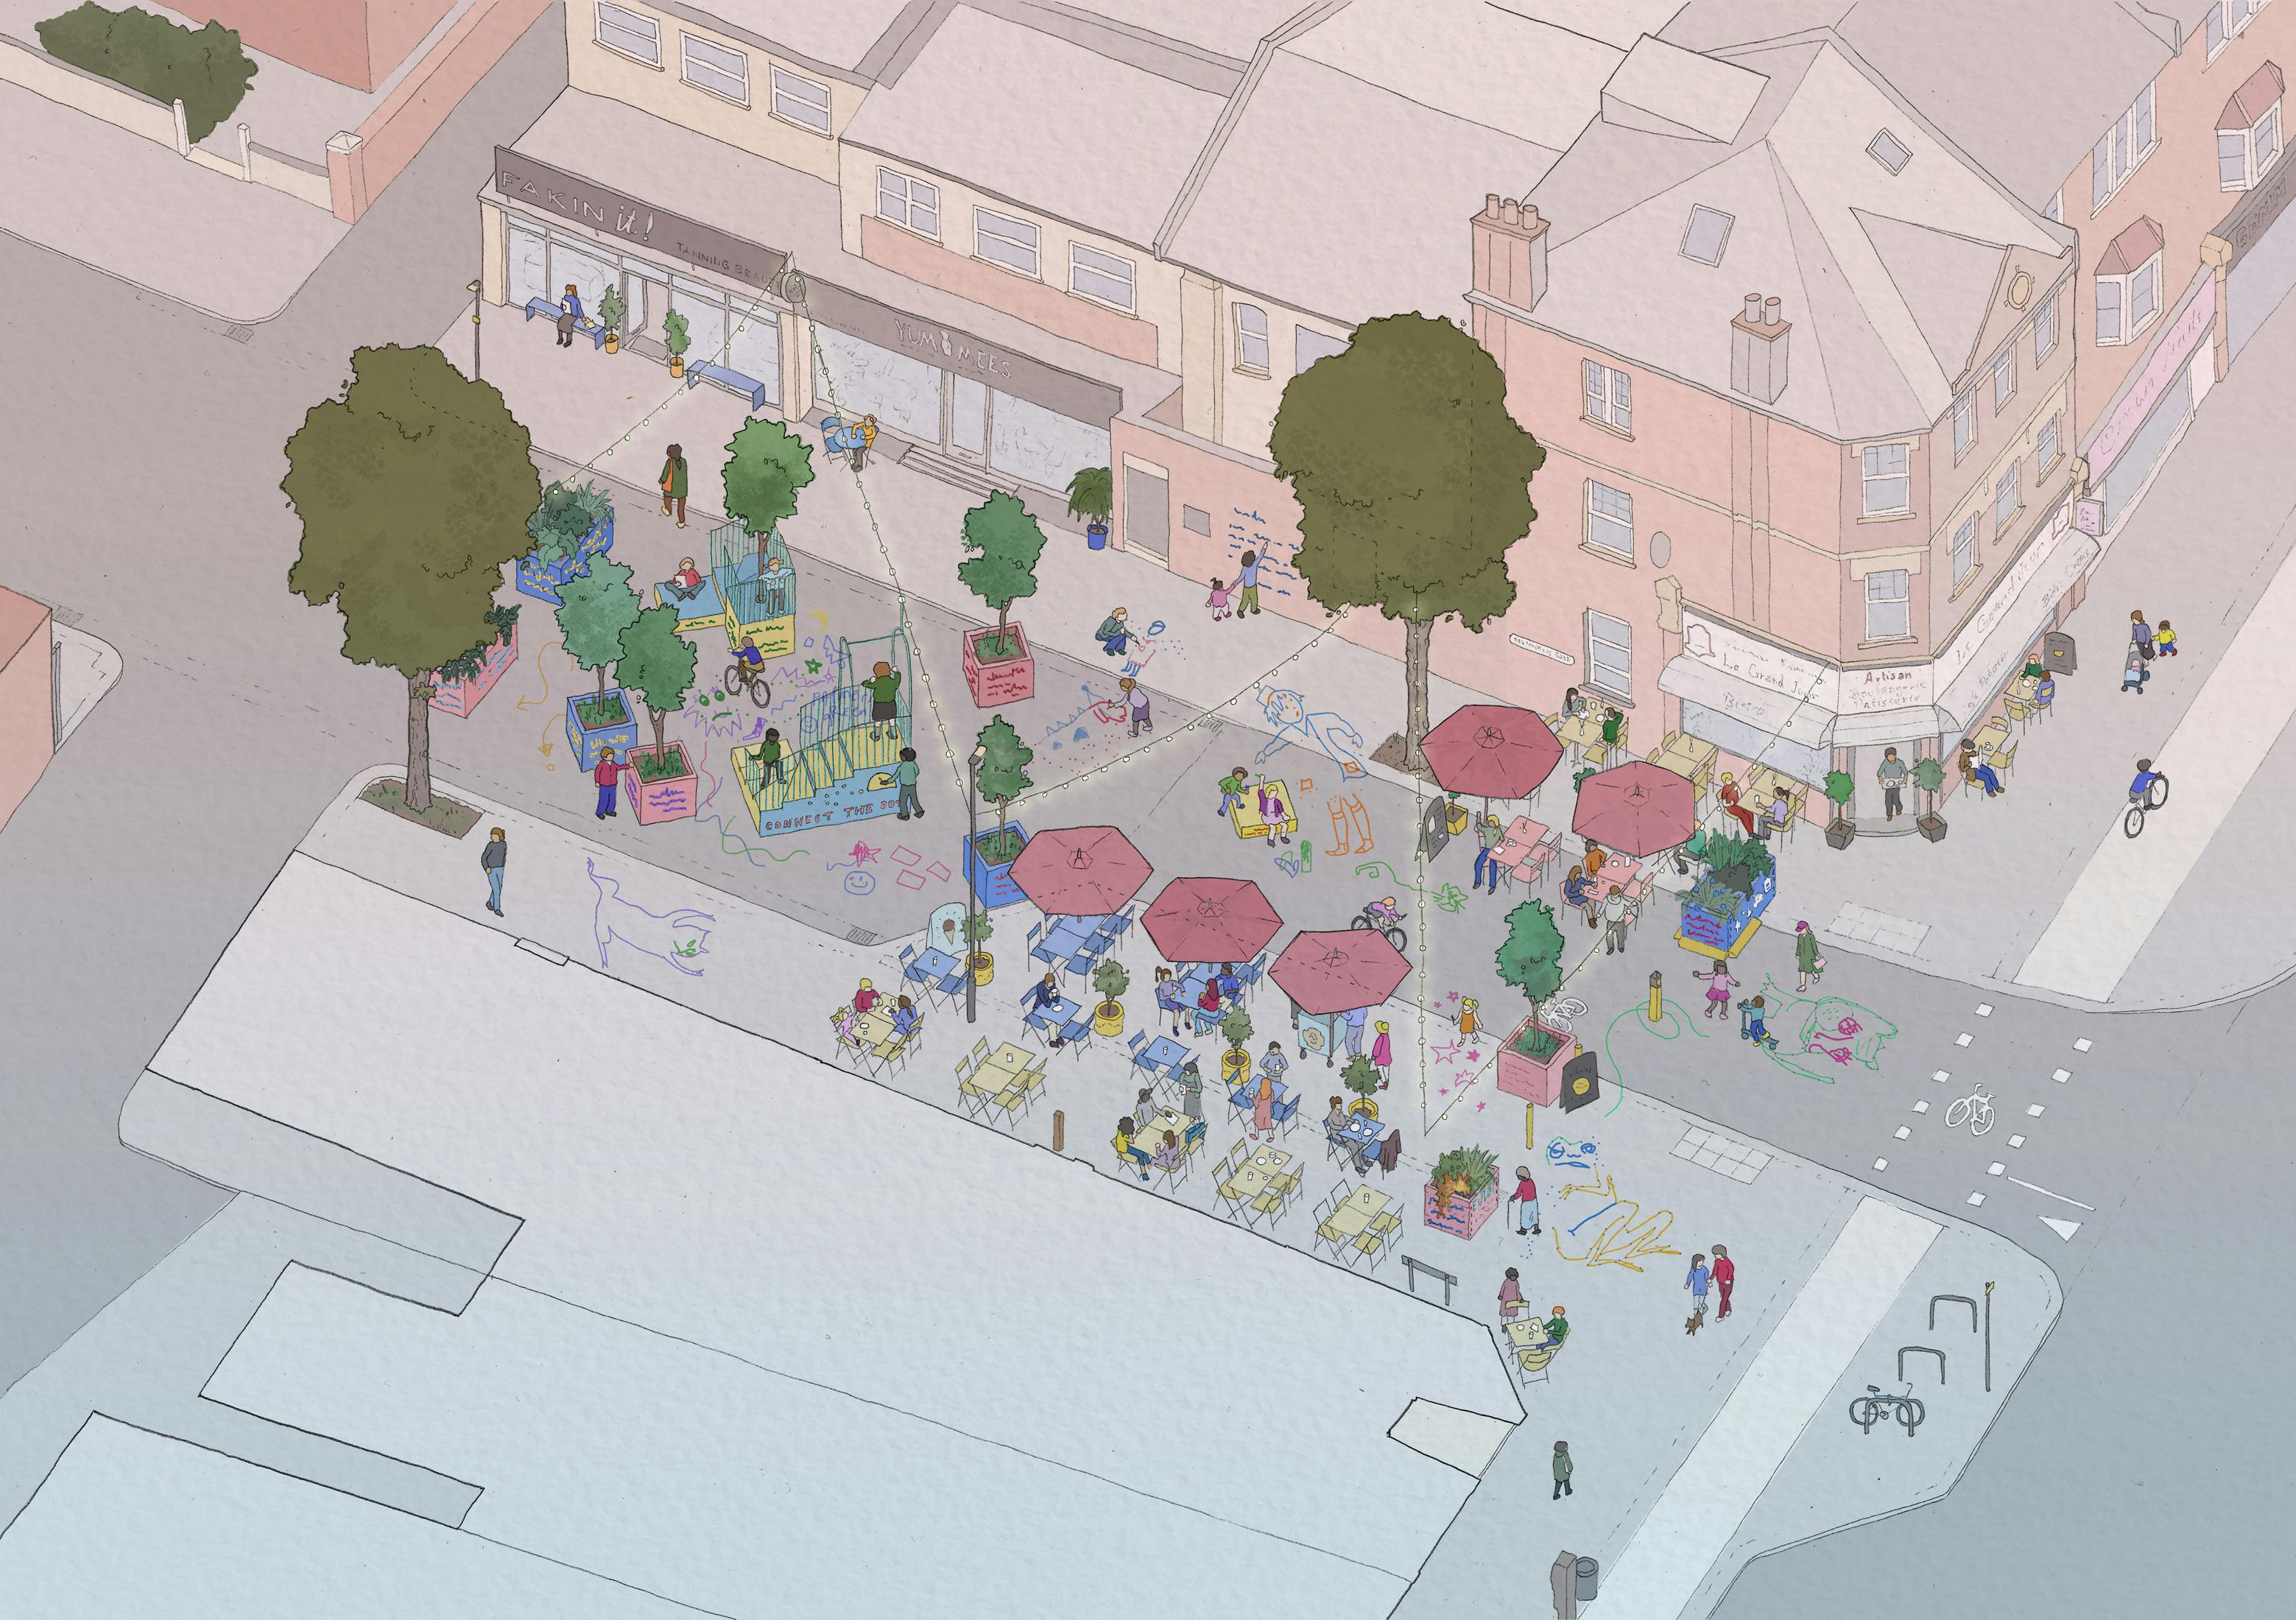 Plans for Devonshire Square